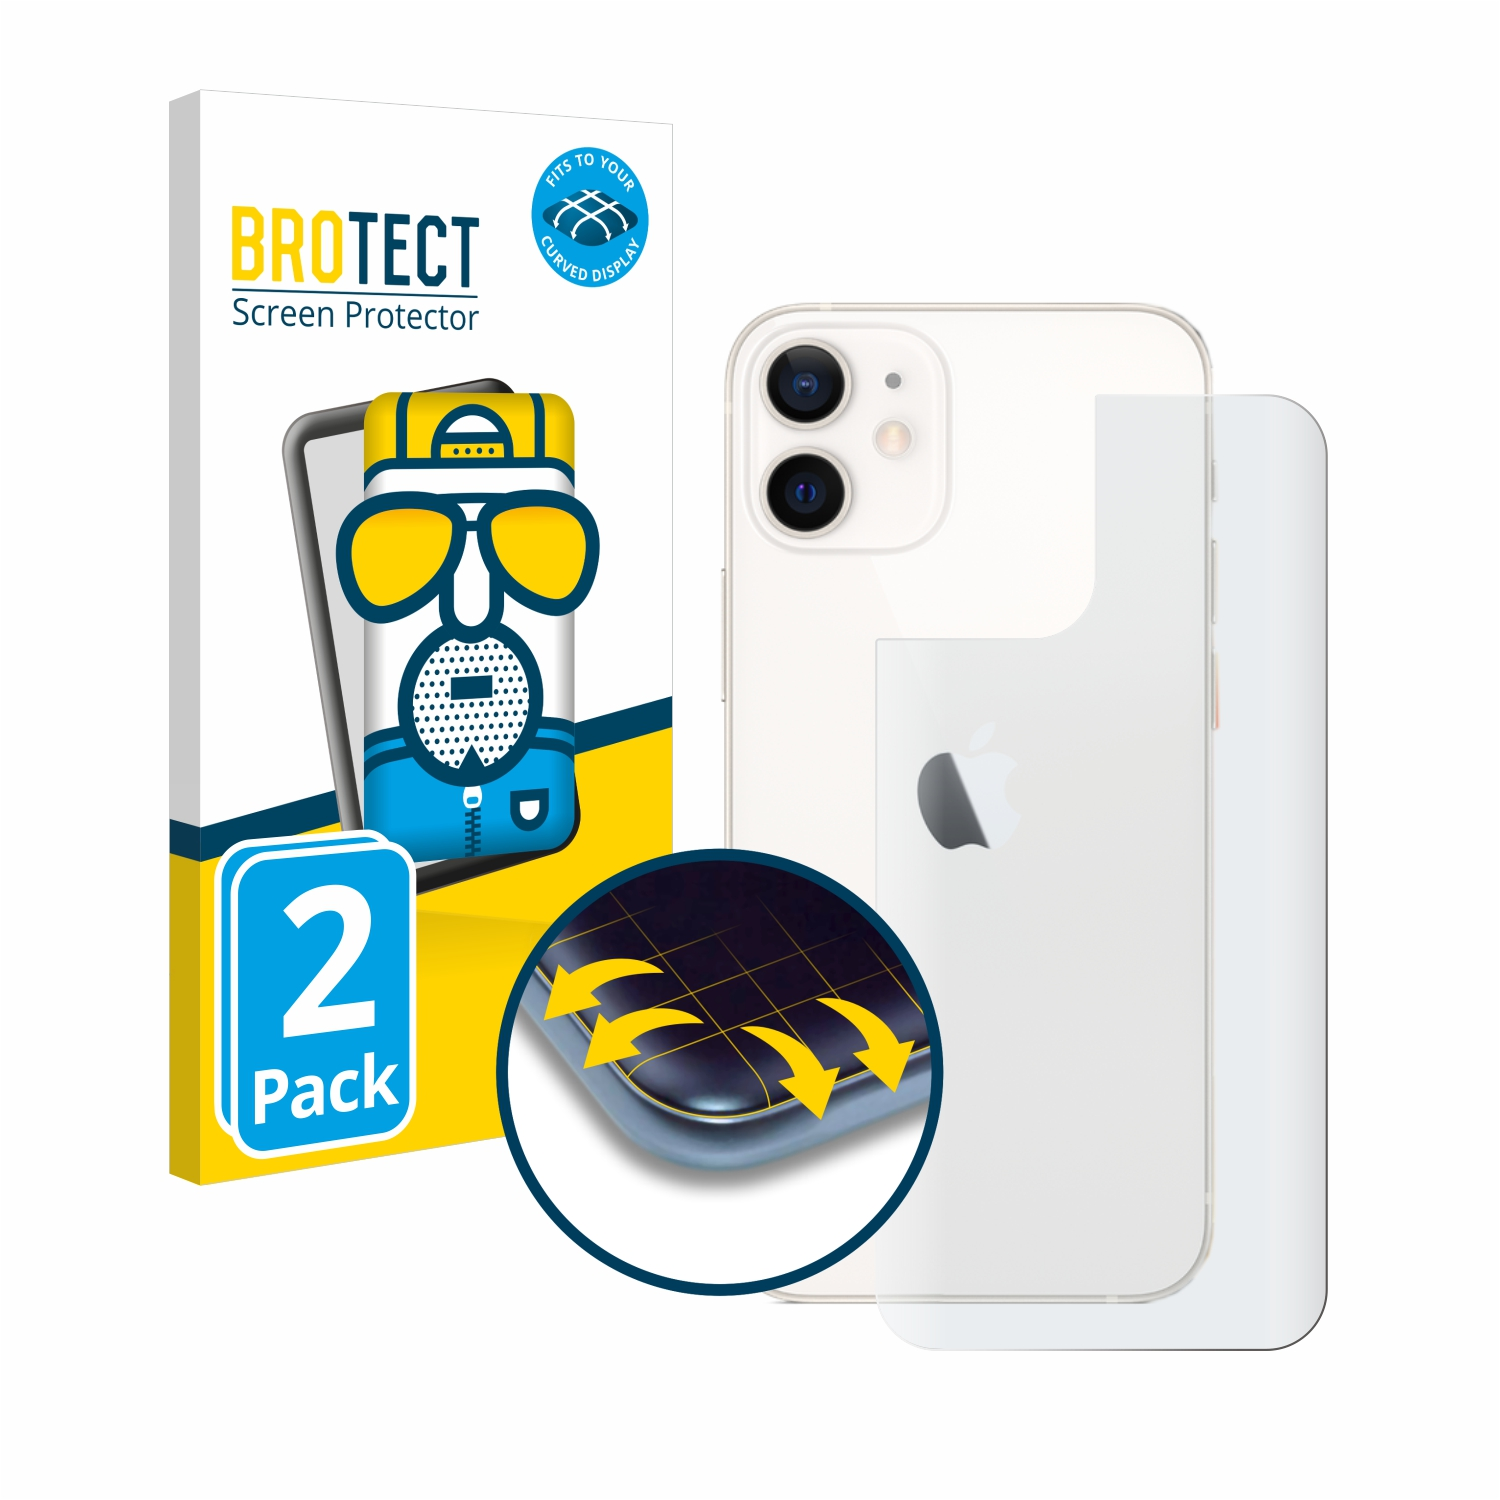 BROTECT 2x Flex matt 12 mini) Full-Cover iPhone Curved 3D Apple Schutzfolie(für